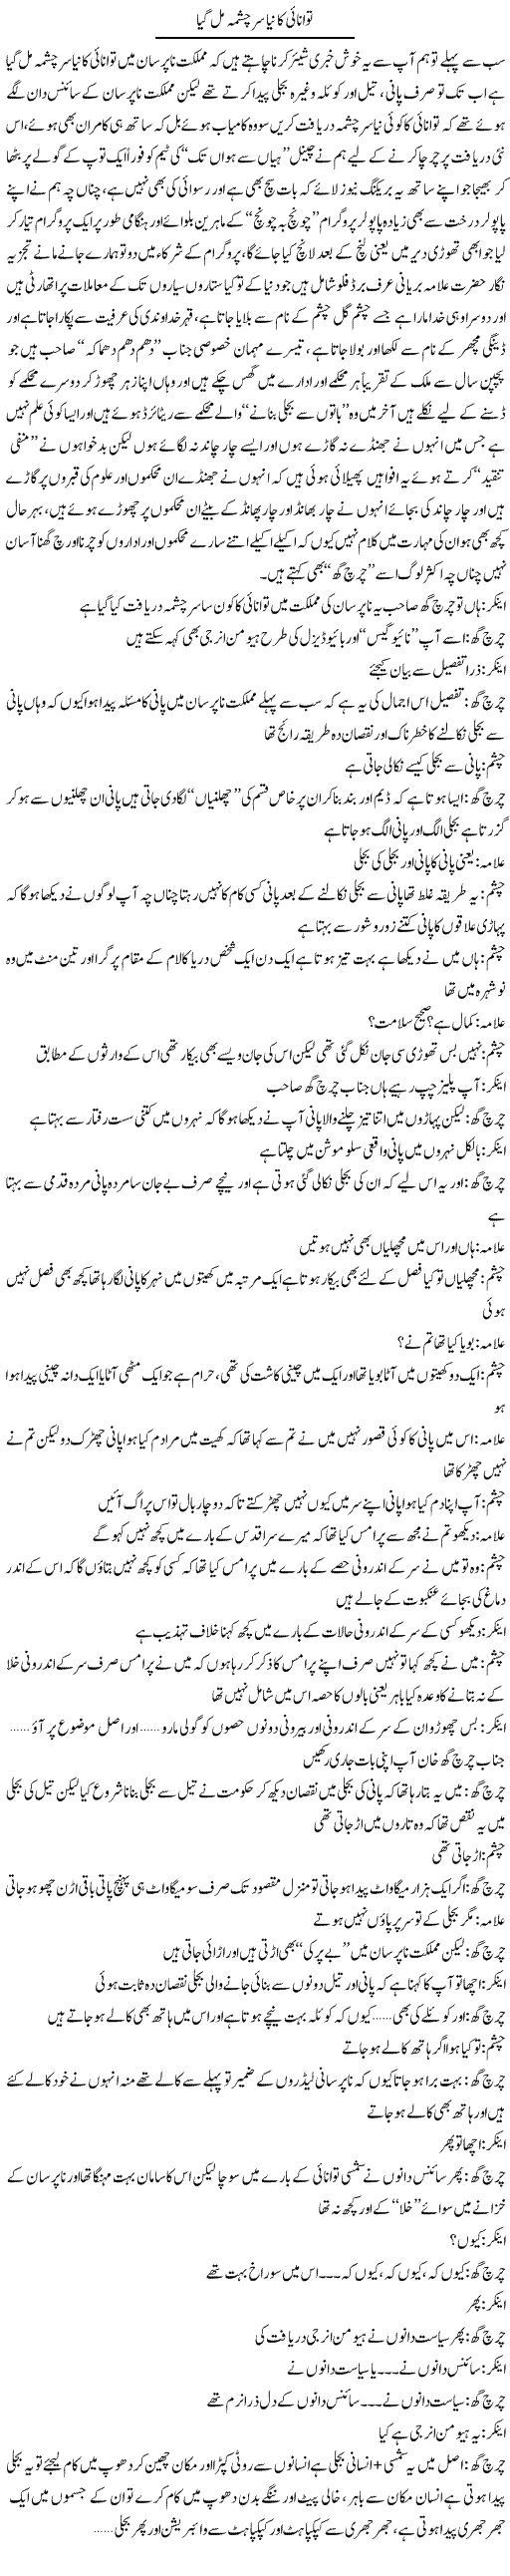 Tawanai Ka Naya Sarchashma Mil Gaya | Saad Ullah Jan Barq | Daily Urdu Columns